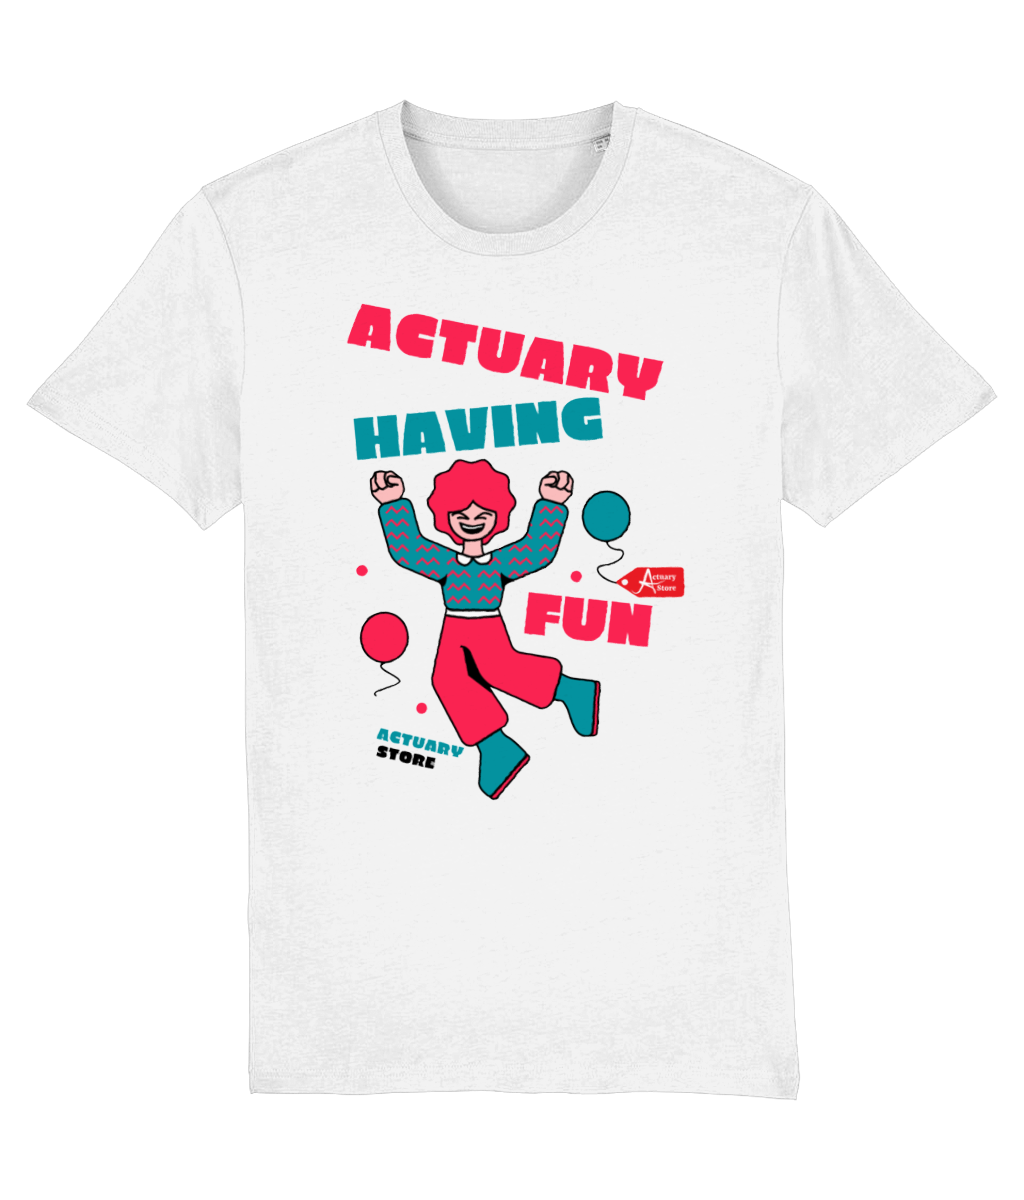 Actuary Having Fun T-Shirt (Black and White variants)